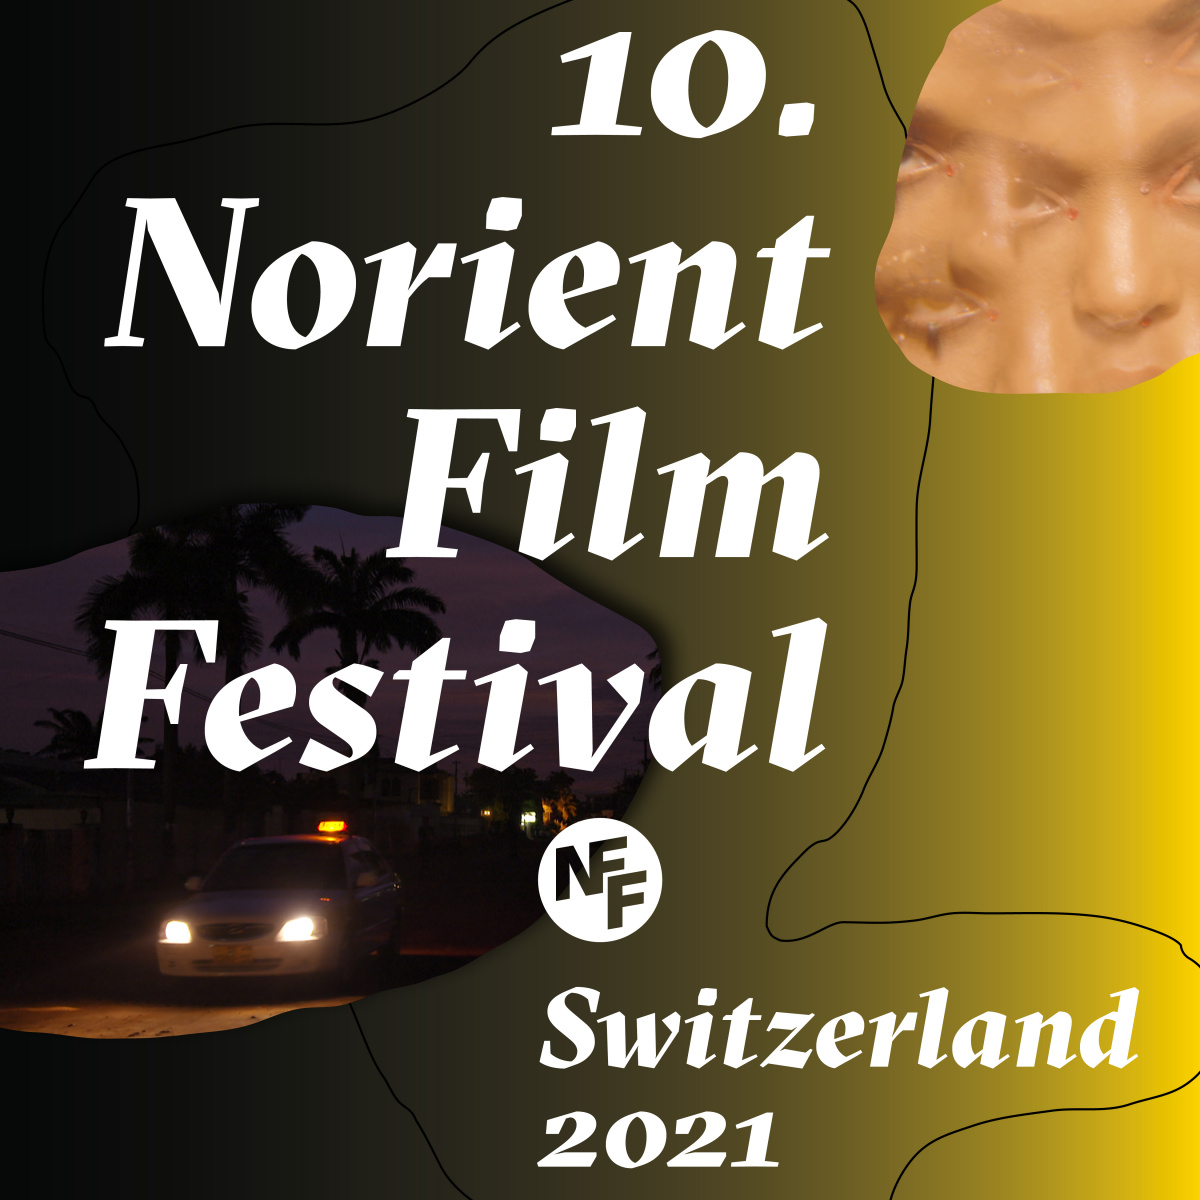 10th Norient Film Festival 2021